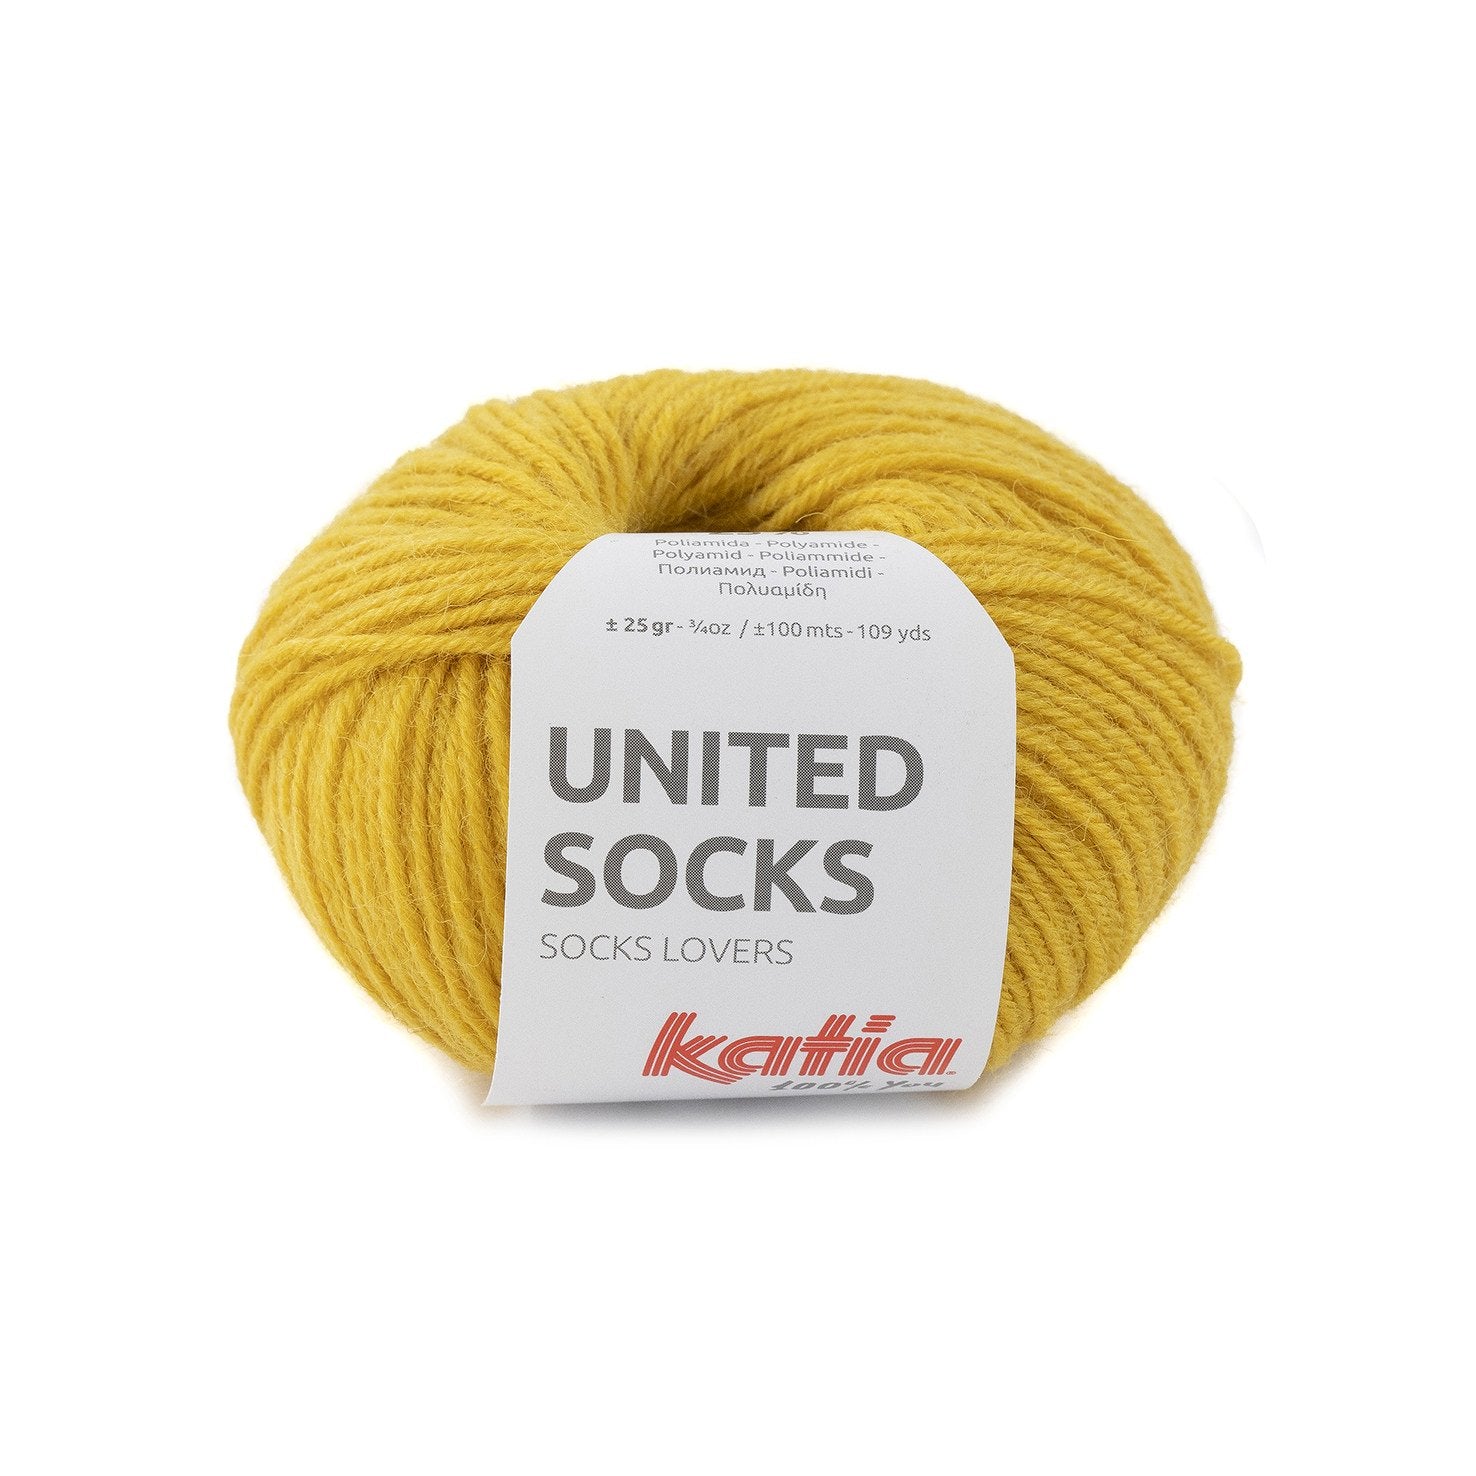 Katia UNITED SOCKS - Ideal wool for knitting quality socks